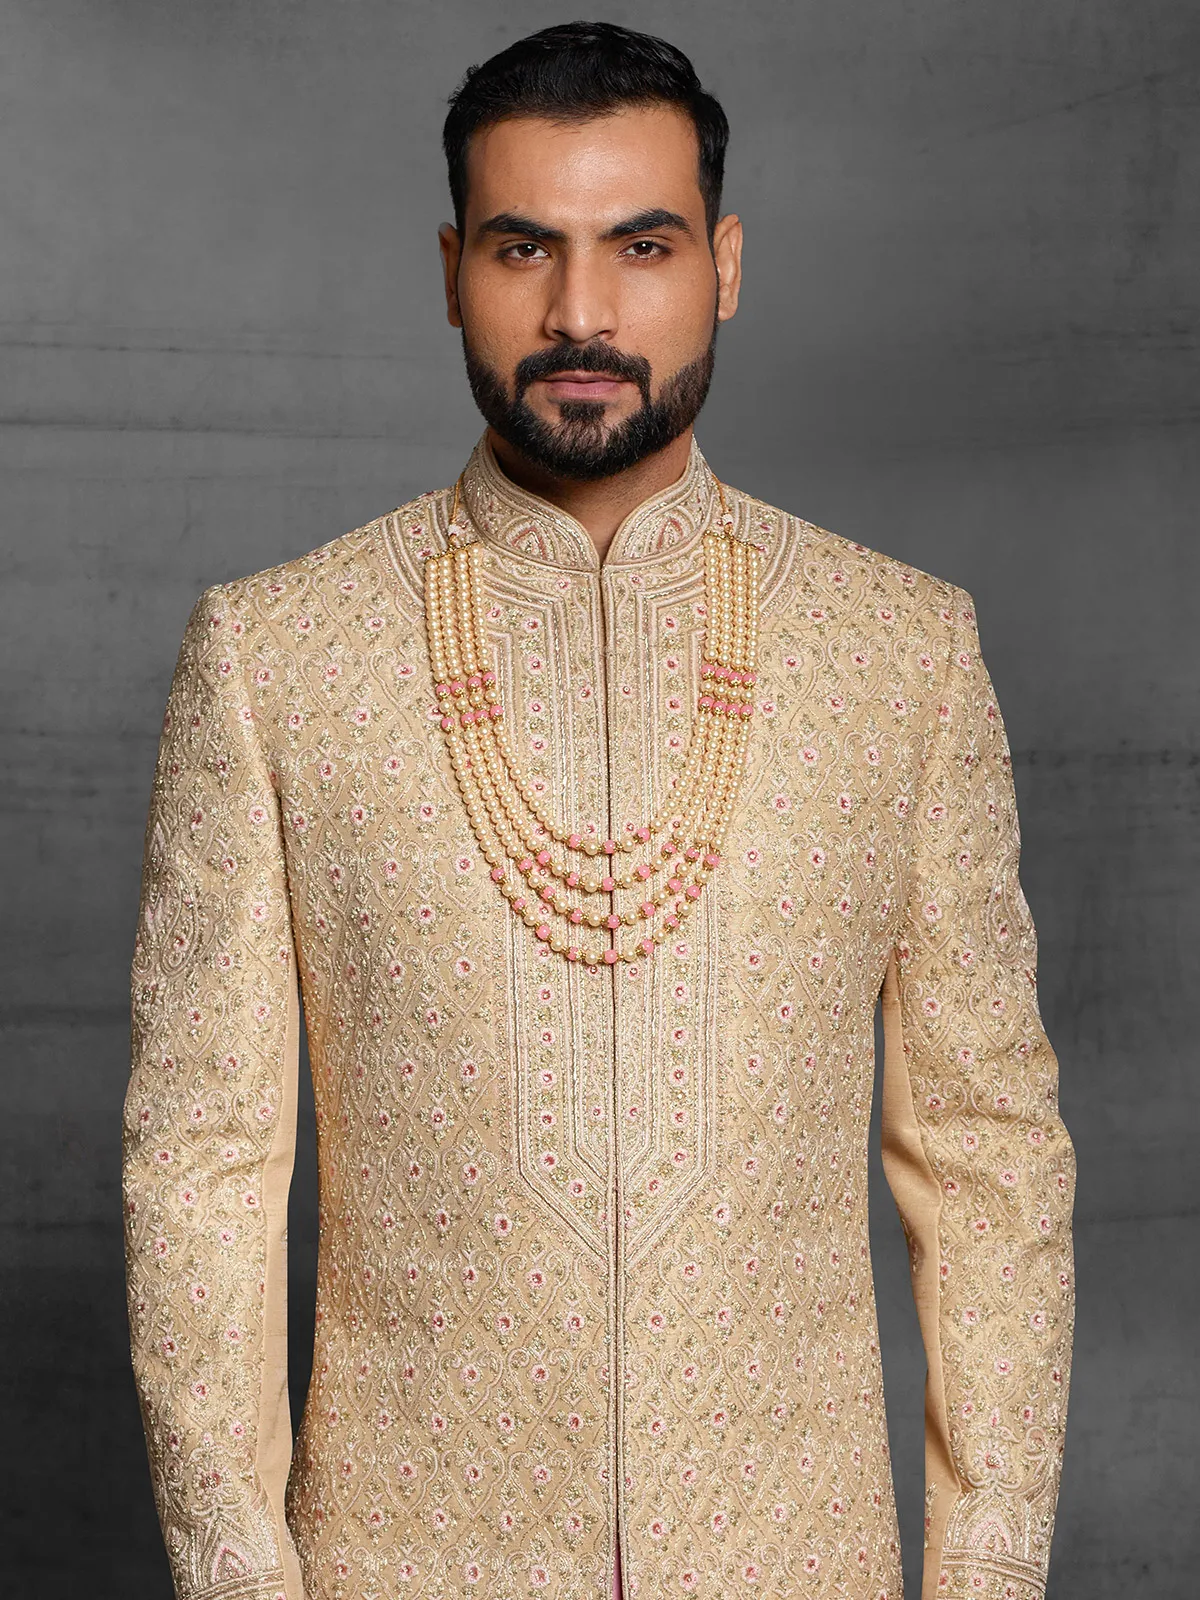 Designer beige color silk fabric sherwani